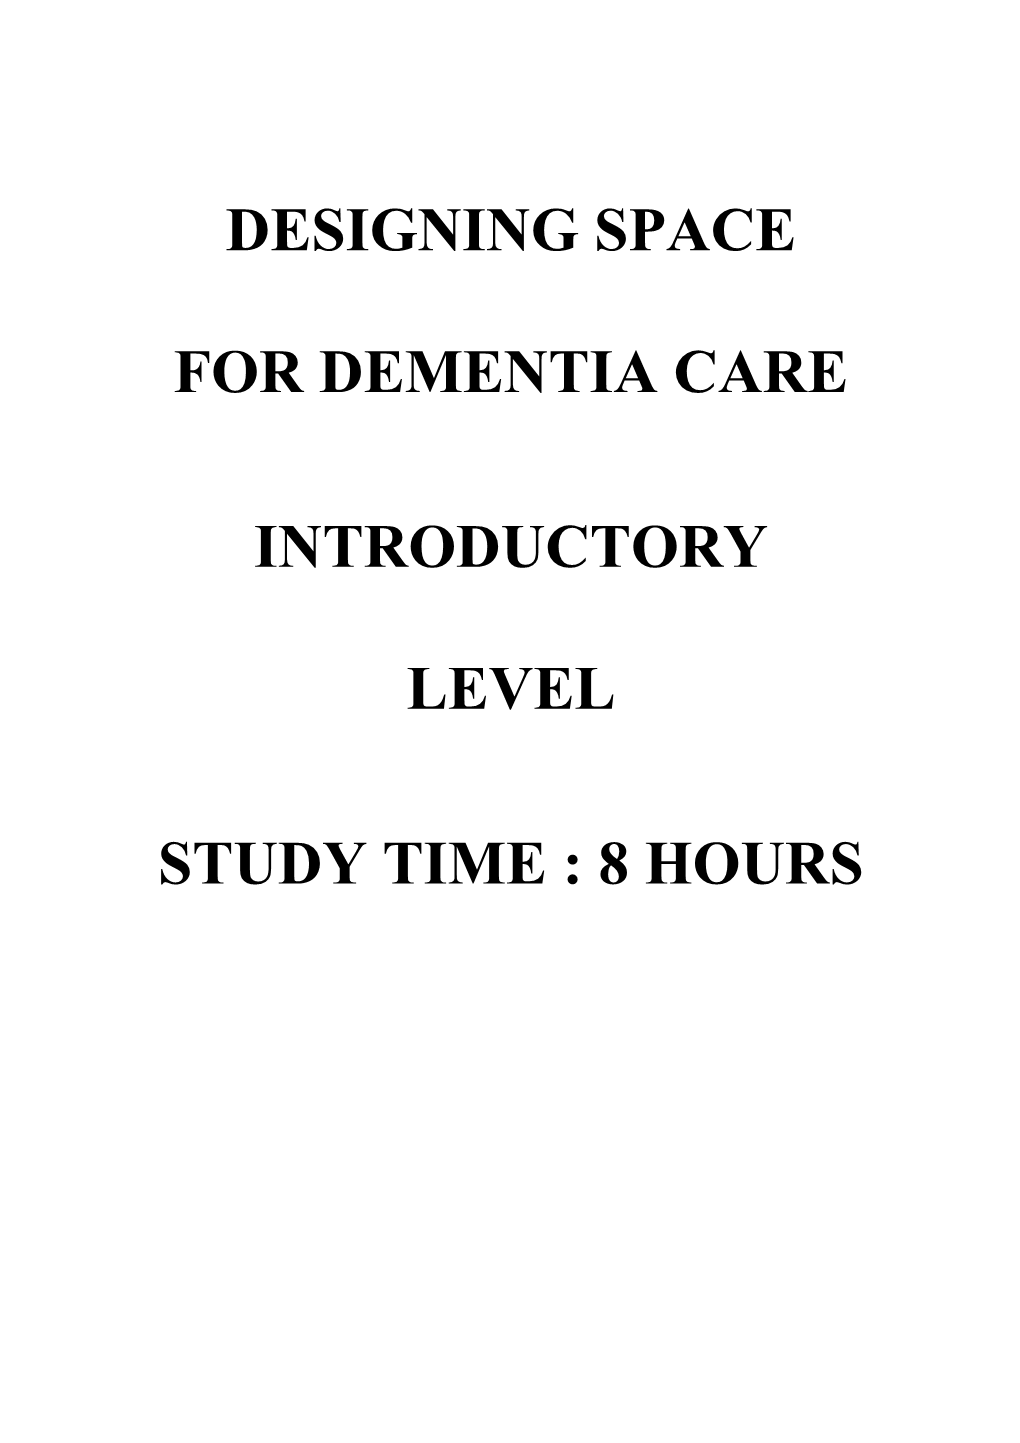 Designing Space for Dementia Care